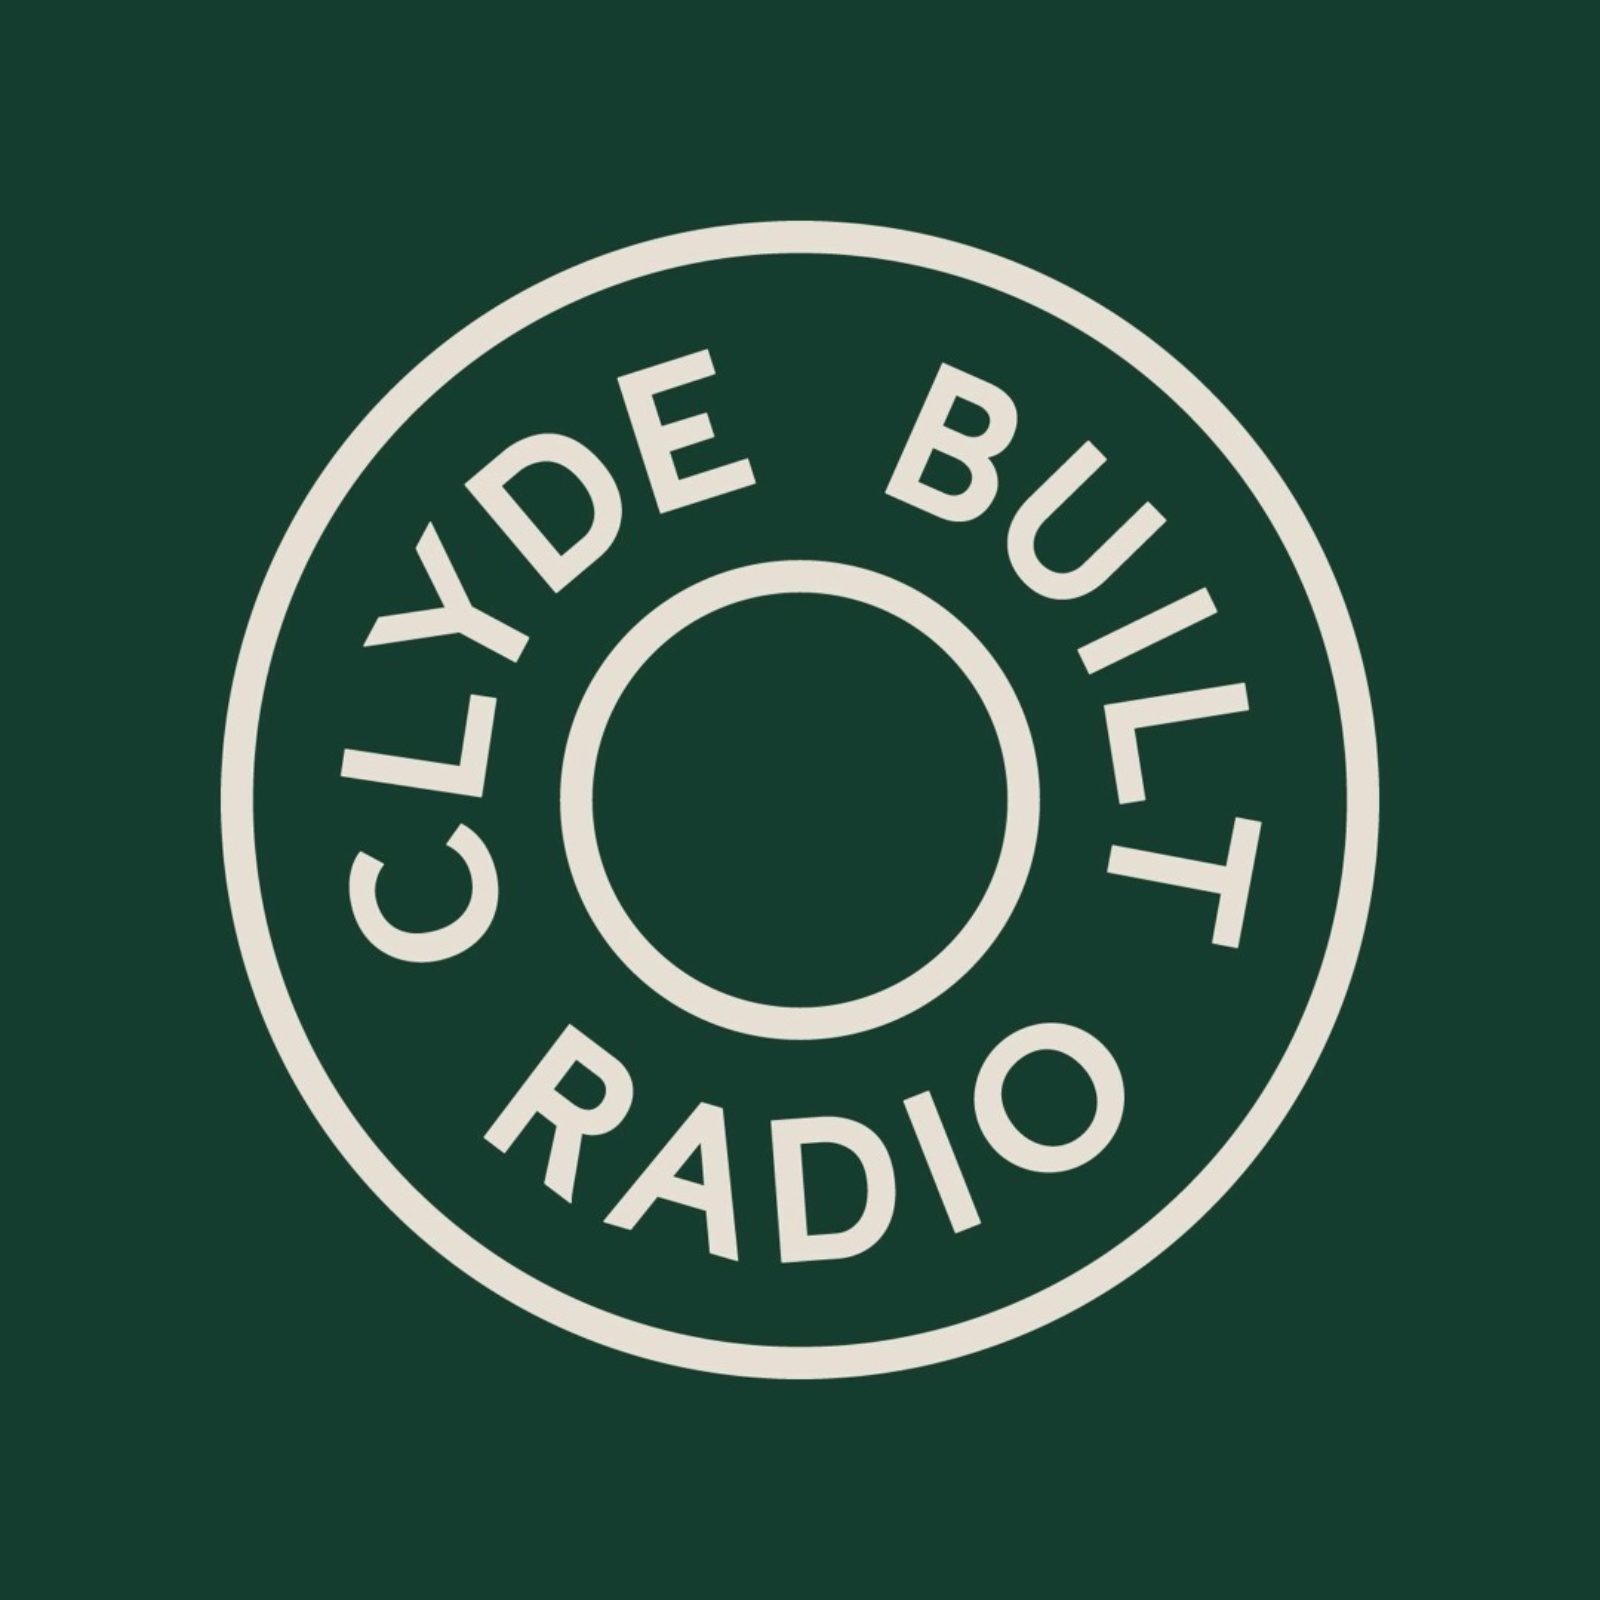 CLYDE BUILT RADIO - Bank Holiday Fundraiser